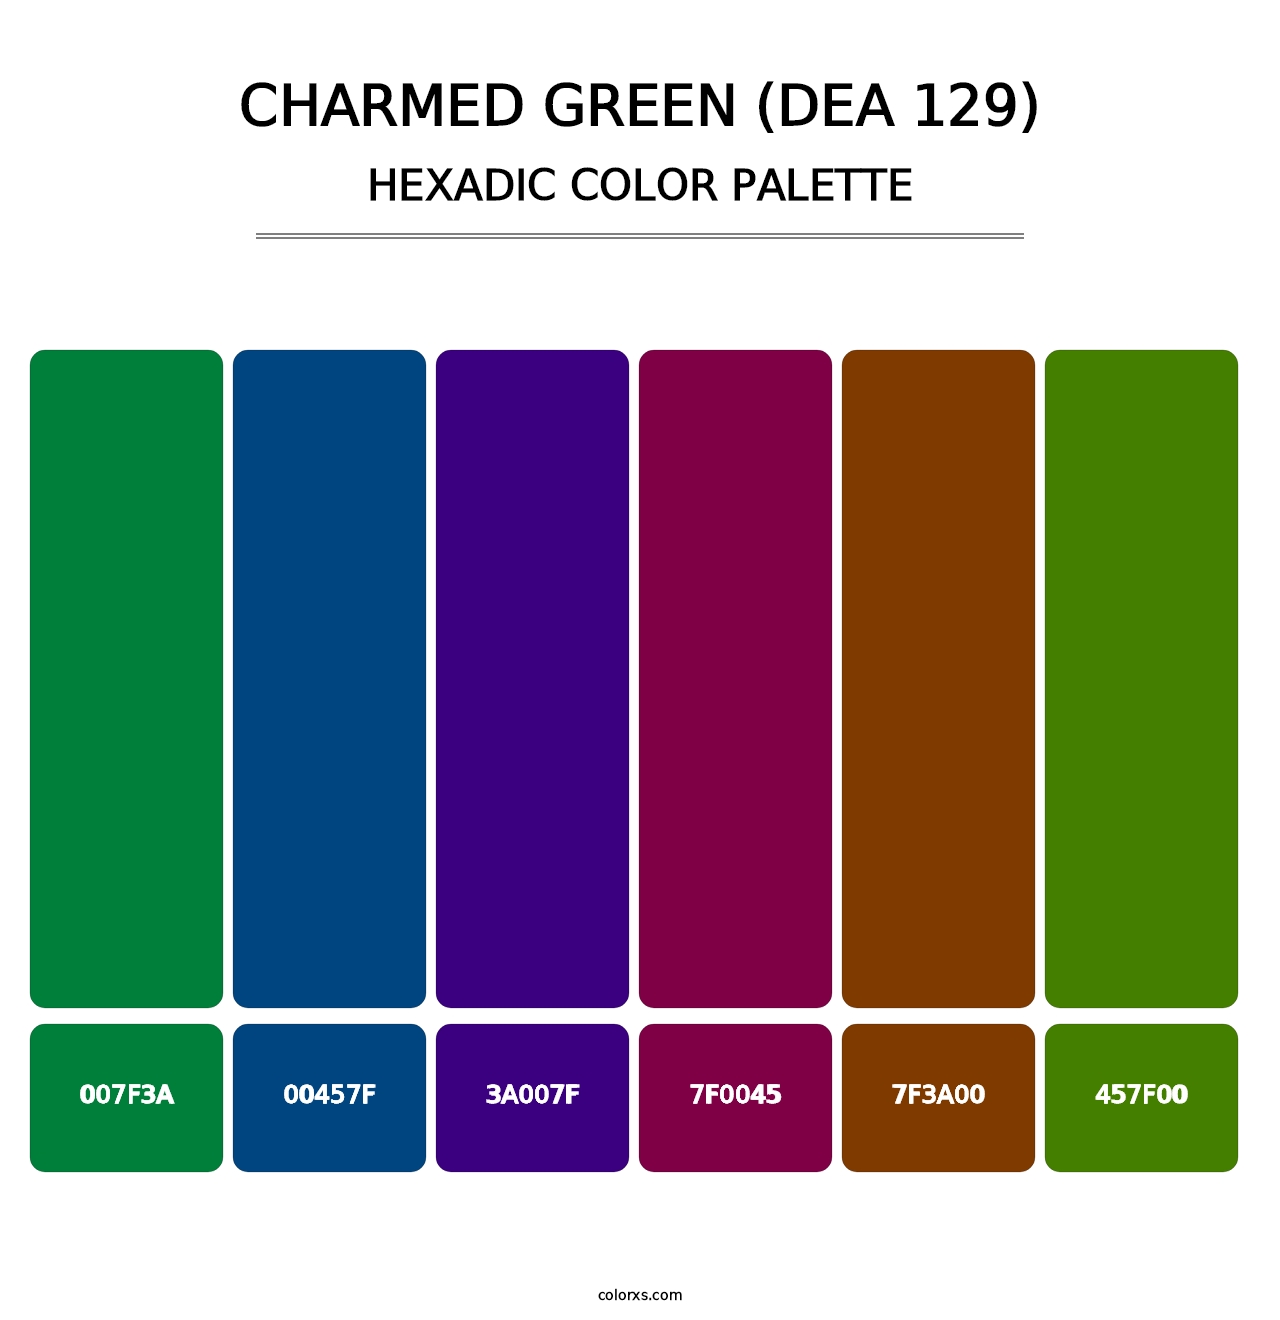 Charmed Green (DEA 129) - Hexadic Color Palette